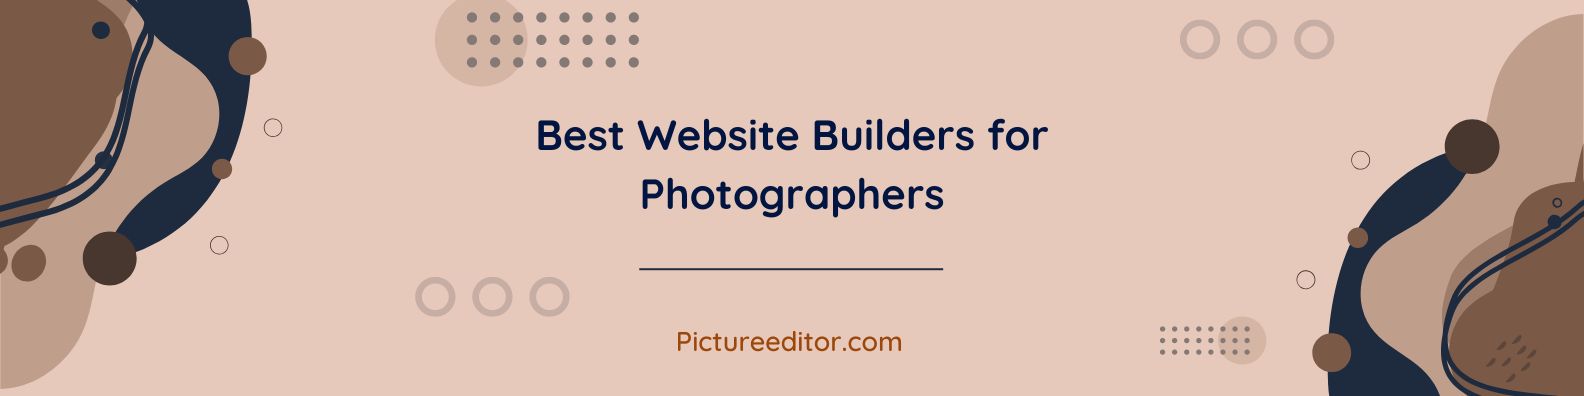 Best Website Builders for Photographers